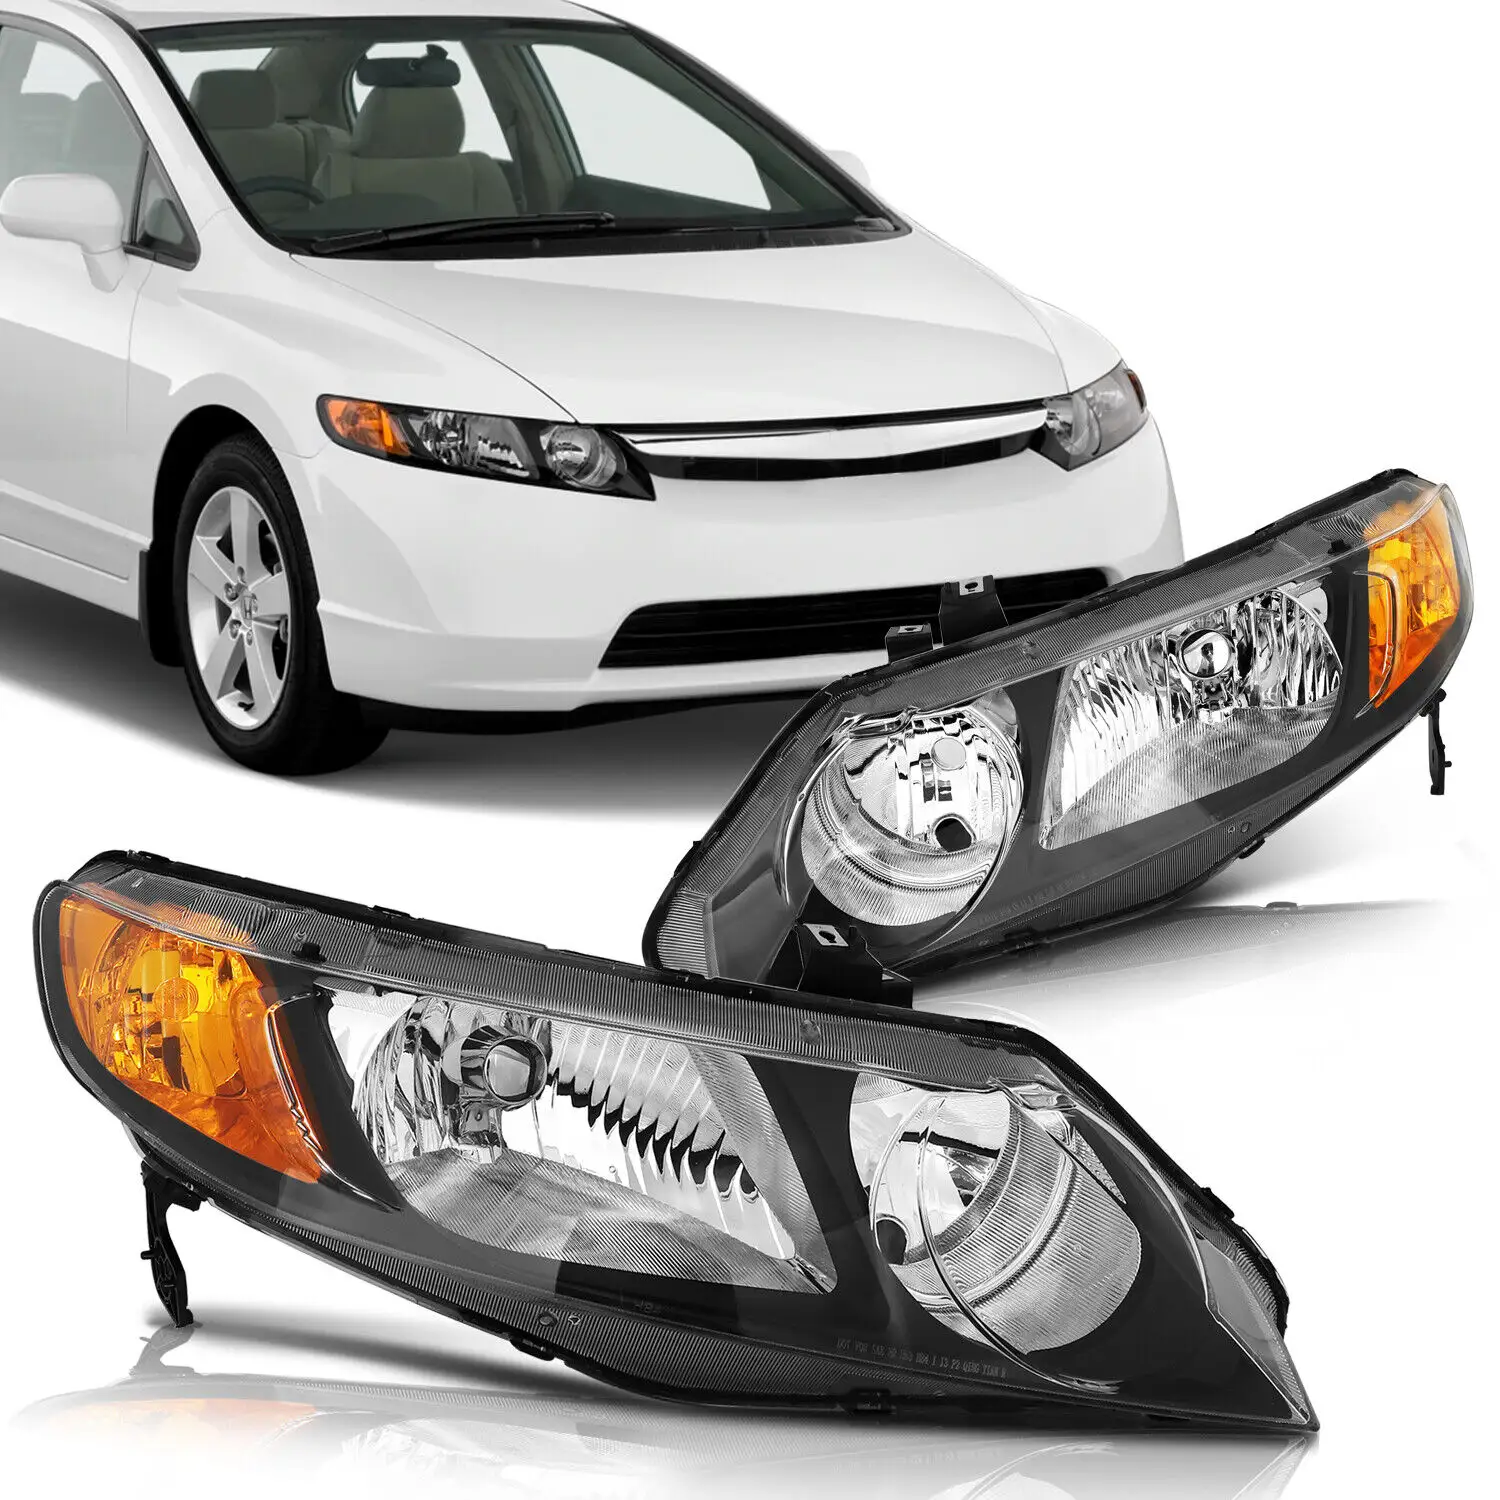 OEM auto parts replacement new black headlights left right headlamp for Honda Civic Sedan 2006-2011